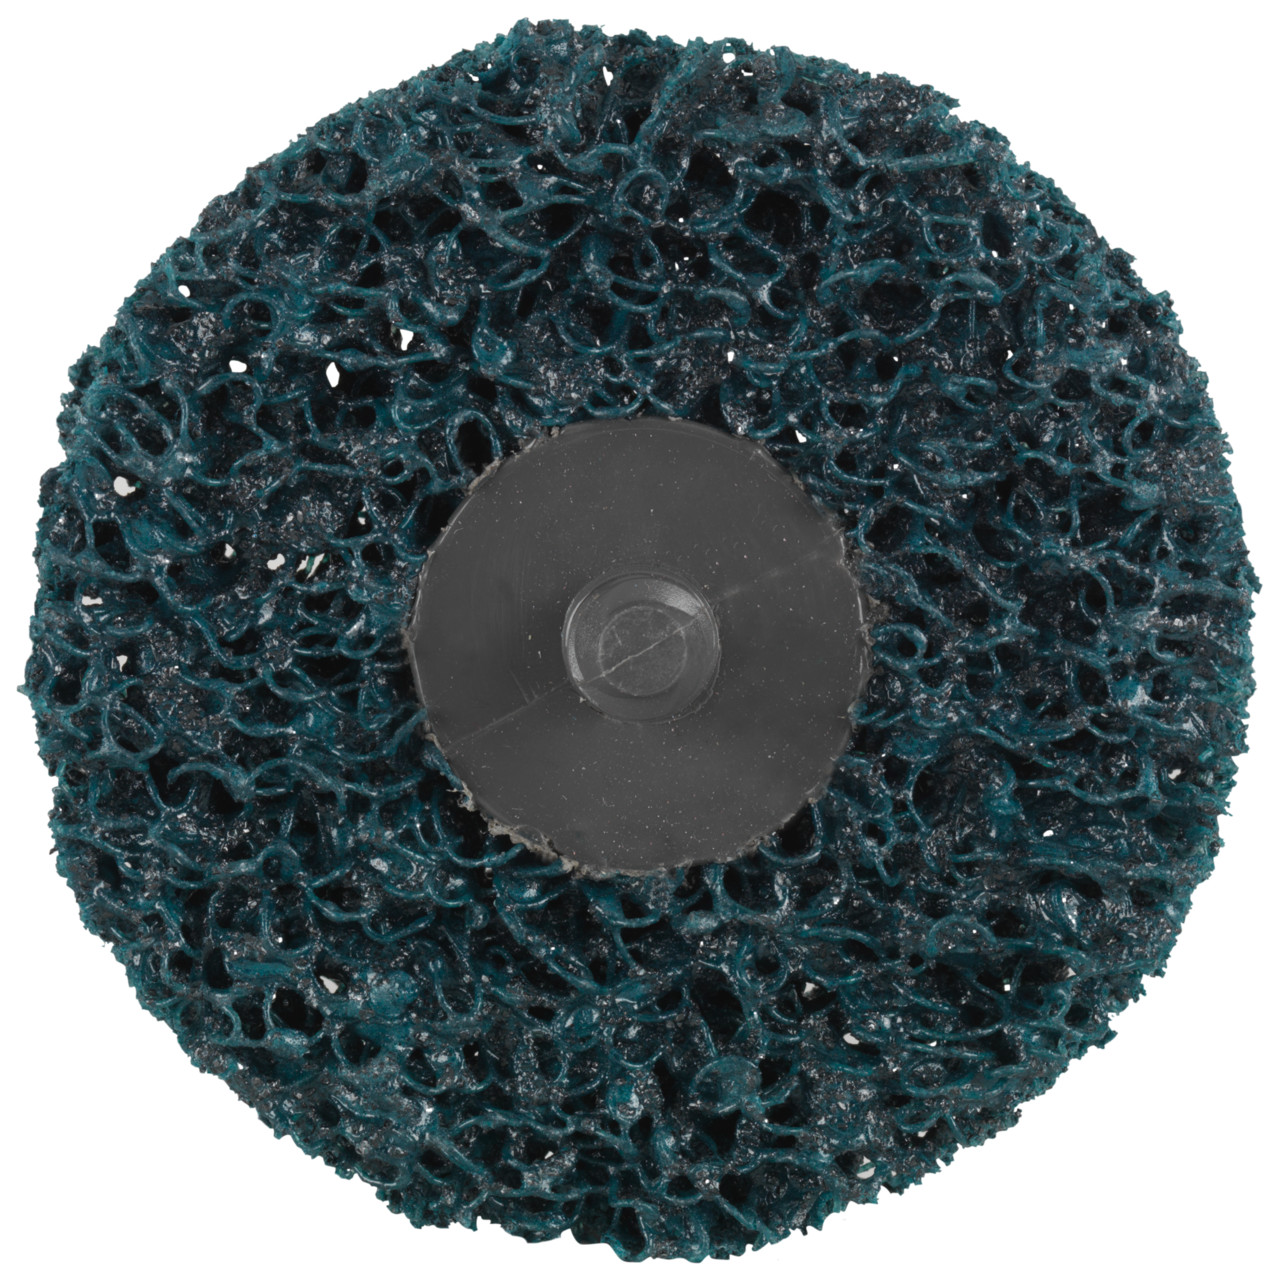 Disco per pulizia grossolana Tyrolit dimensione 50xR Per acciaio, acciaio inox e PVC, A EX. GROB, forma: QDISC, Art. 34206231